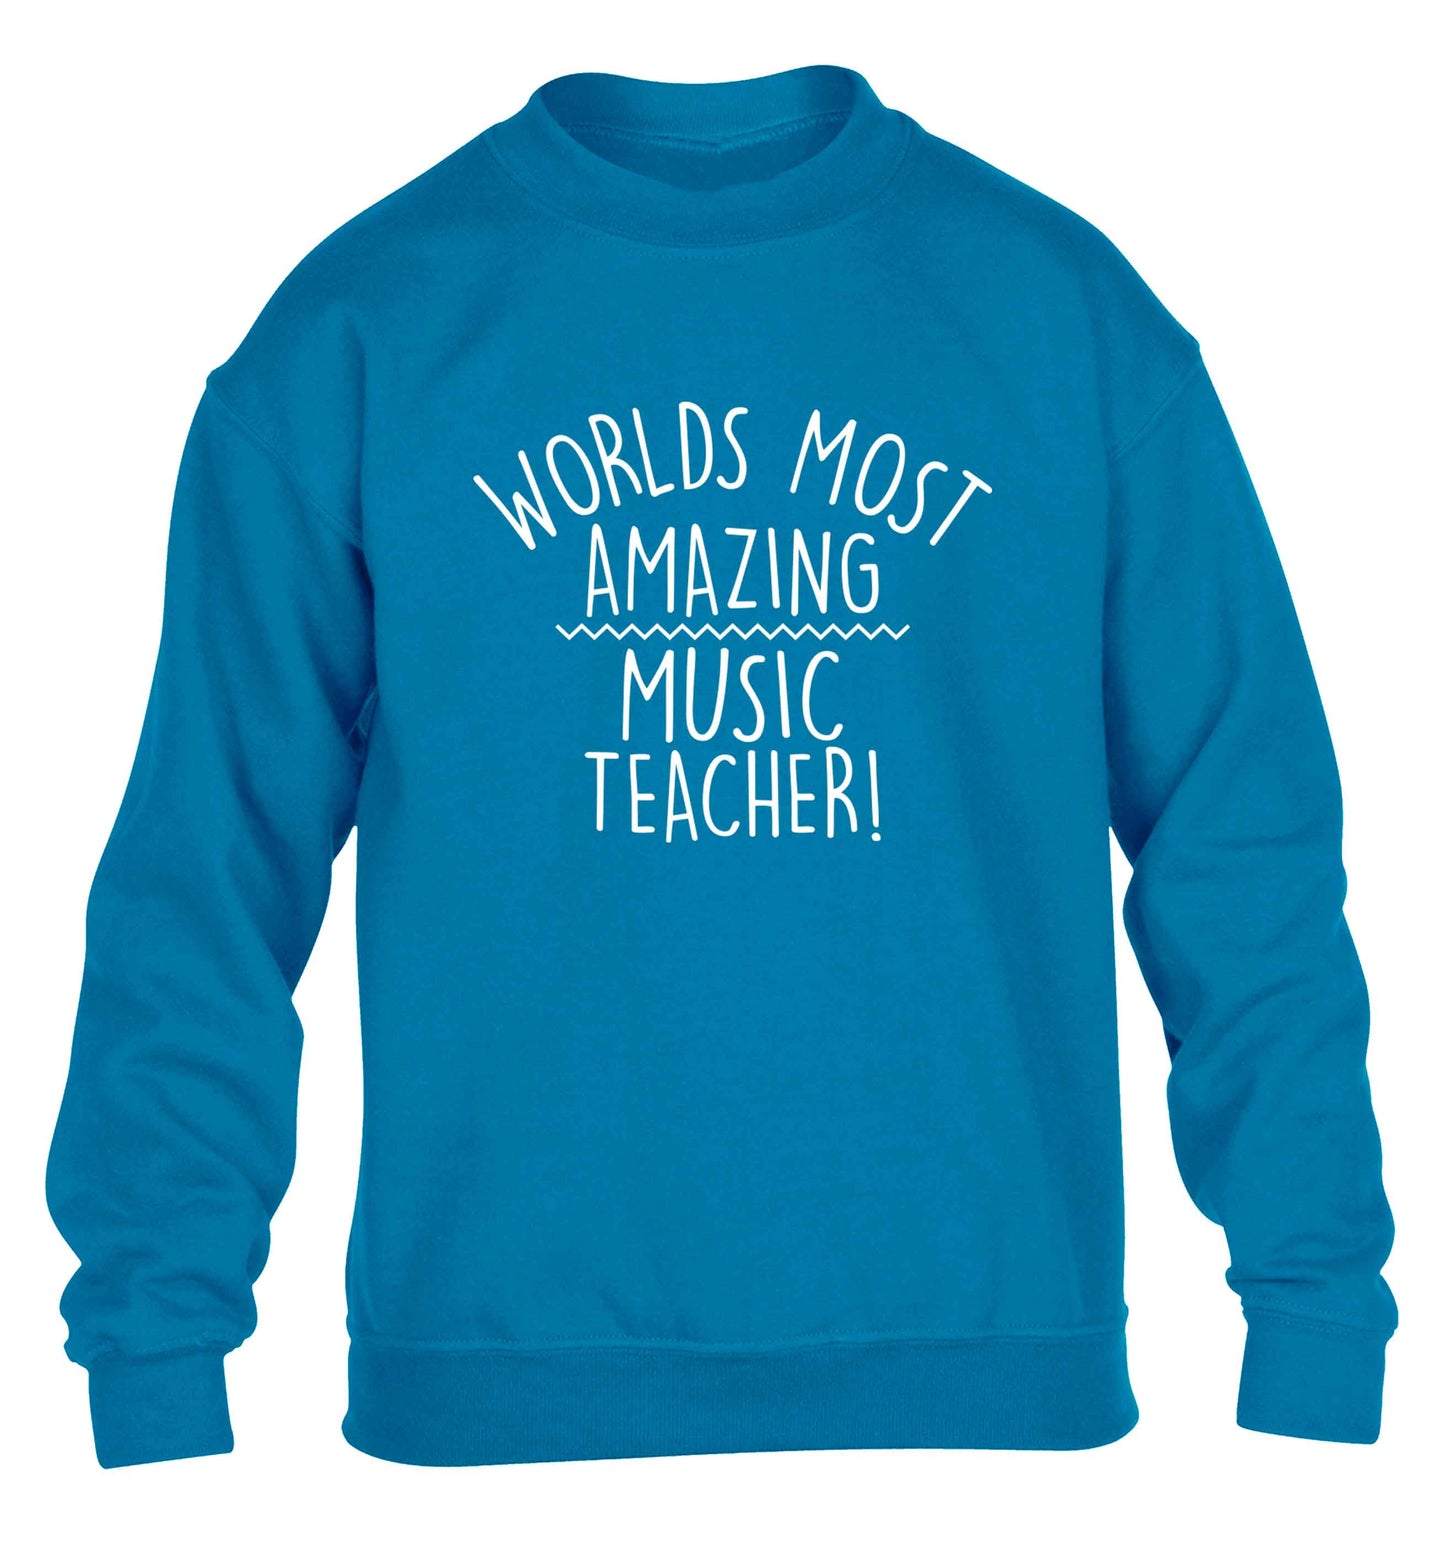 Worlds most amazing music teacher children's blue sweater 12-13 Years